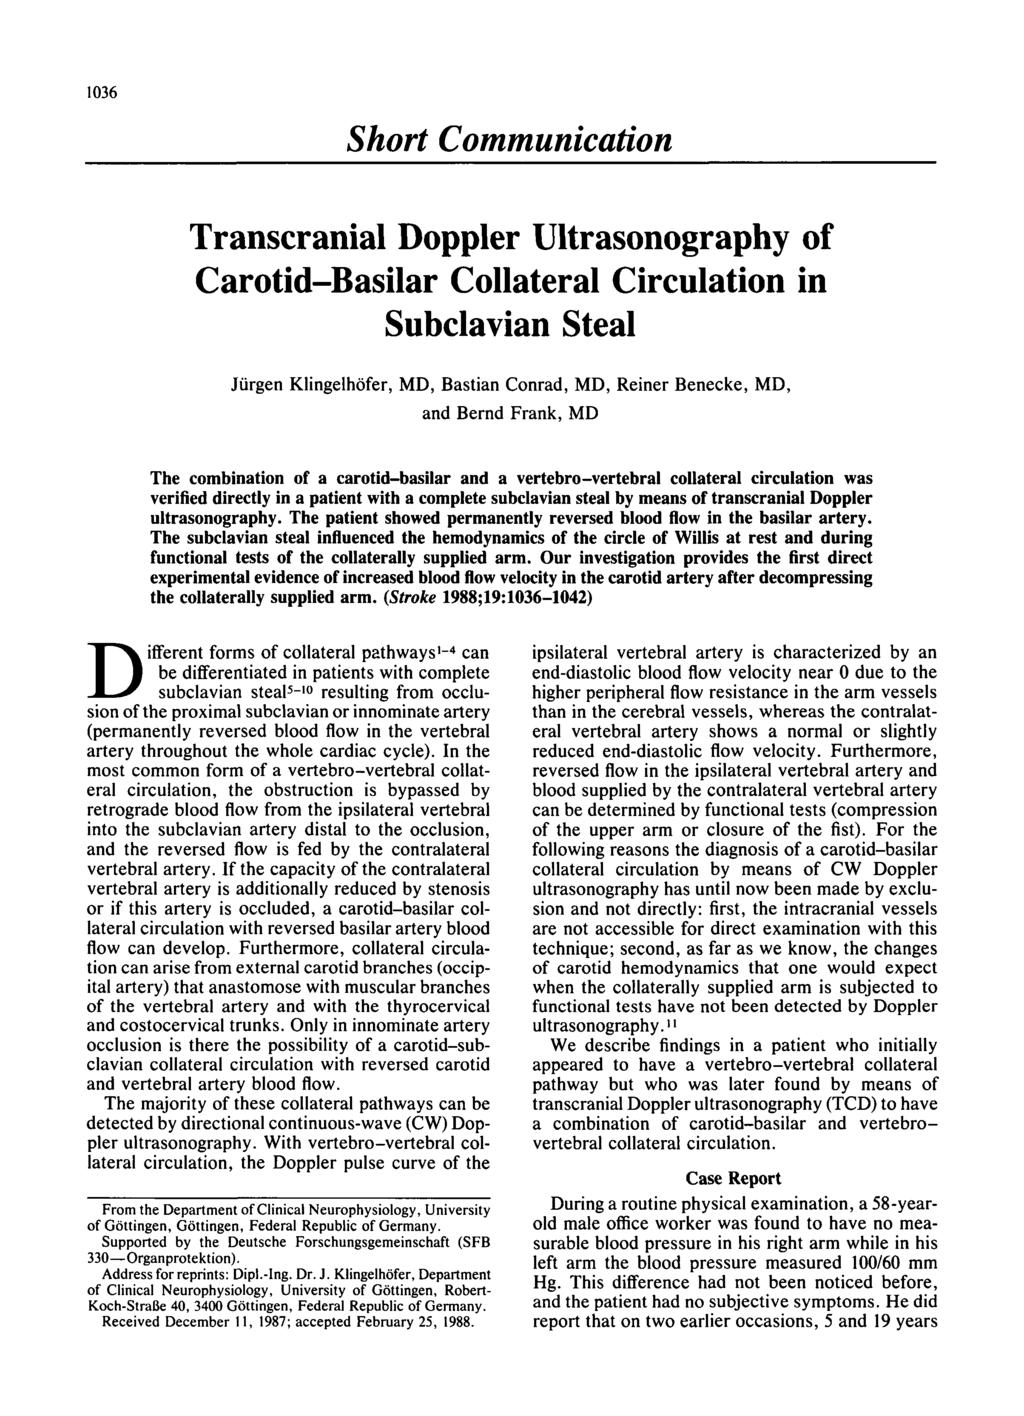 1036 Short Communication Transcranial Doppler Ultrasonography of Carotid-Basilar Collateral Circulation in Subclavian Steal Jiirgen Klingelhofer, MD, Bastian Conrad, MD, Reiner Benecke, MD, and Bernd